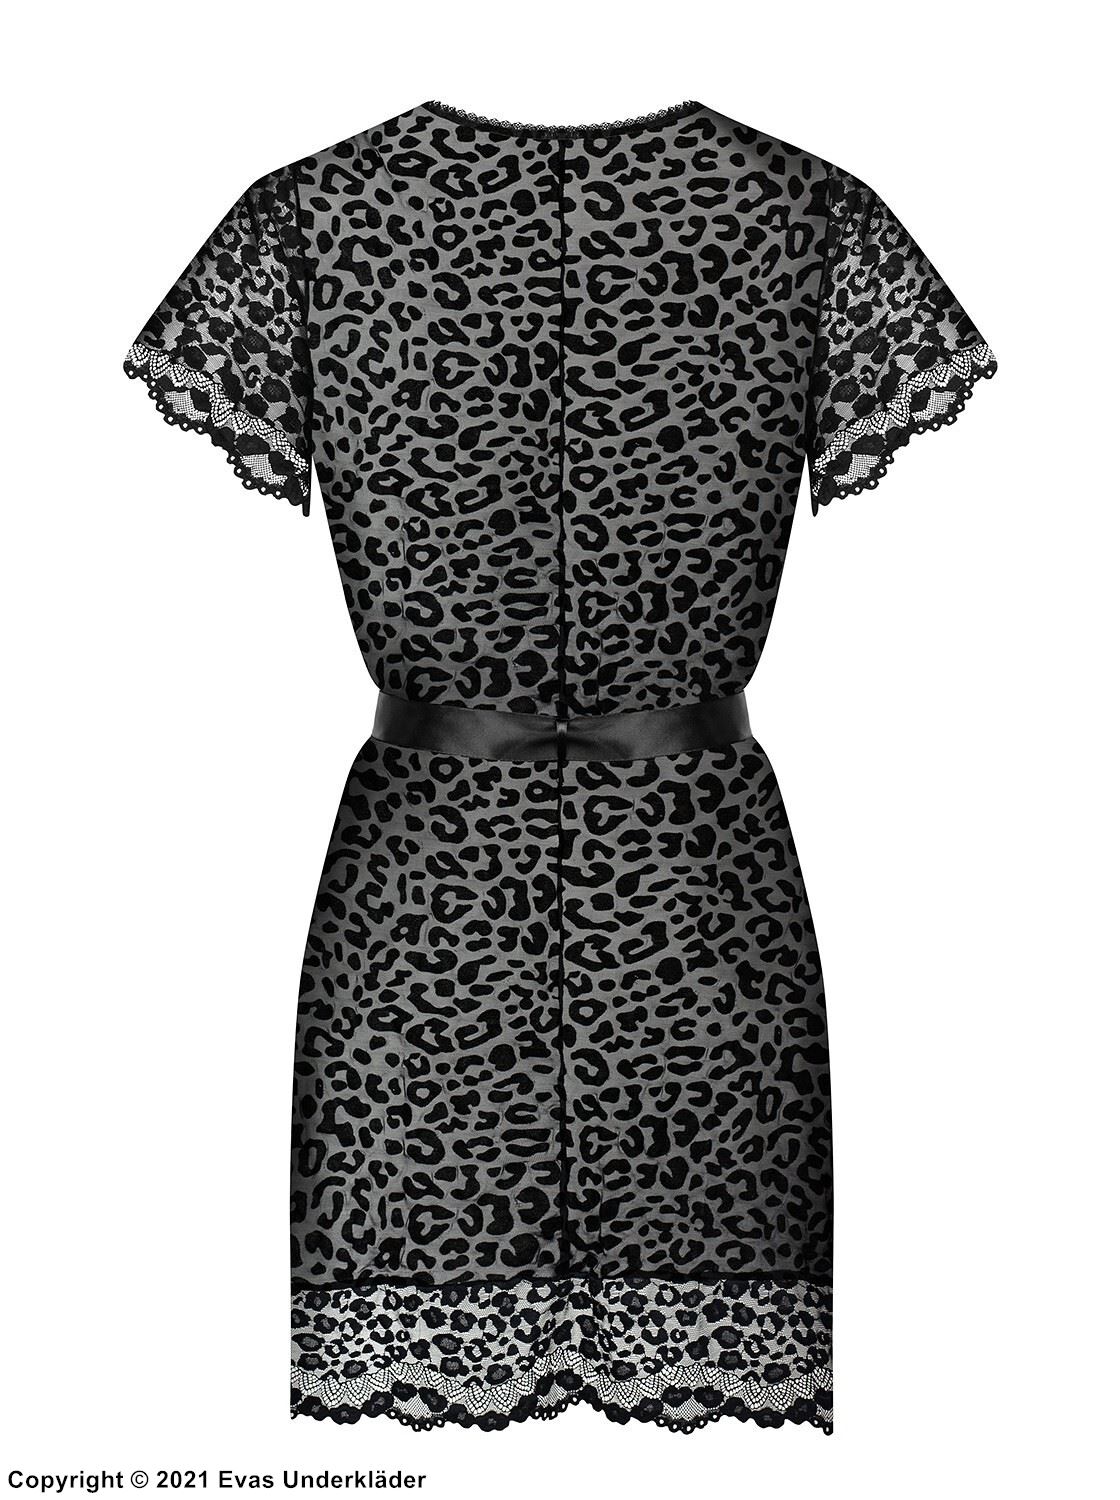 Romantic robe, satin bow, lace edge, short sleeves, leopard (pattern)